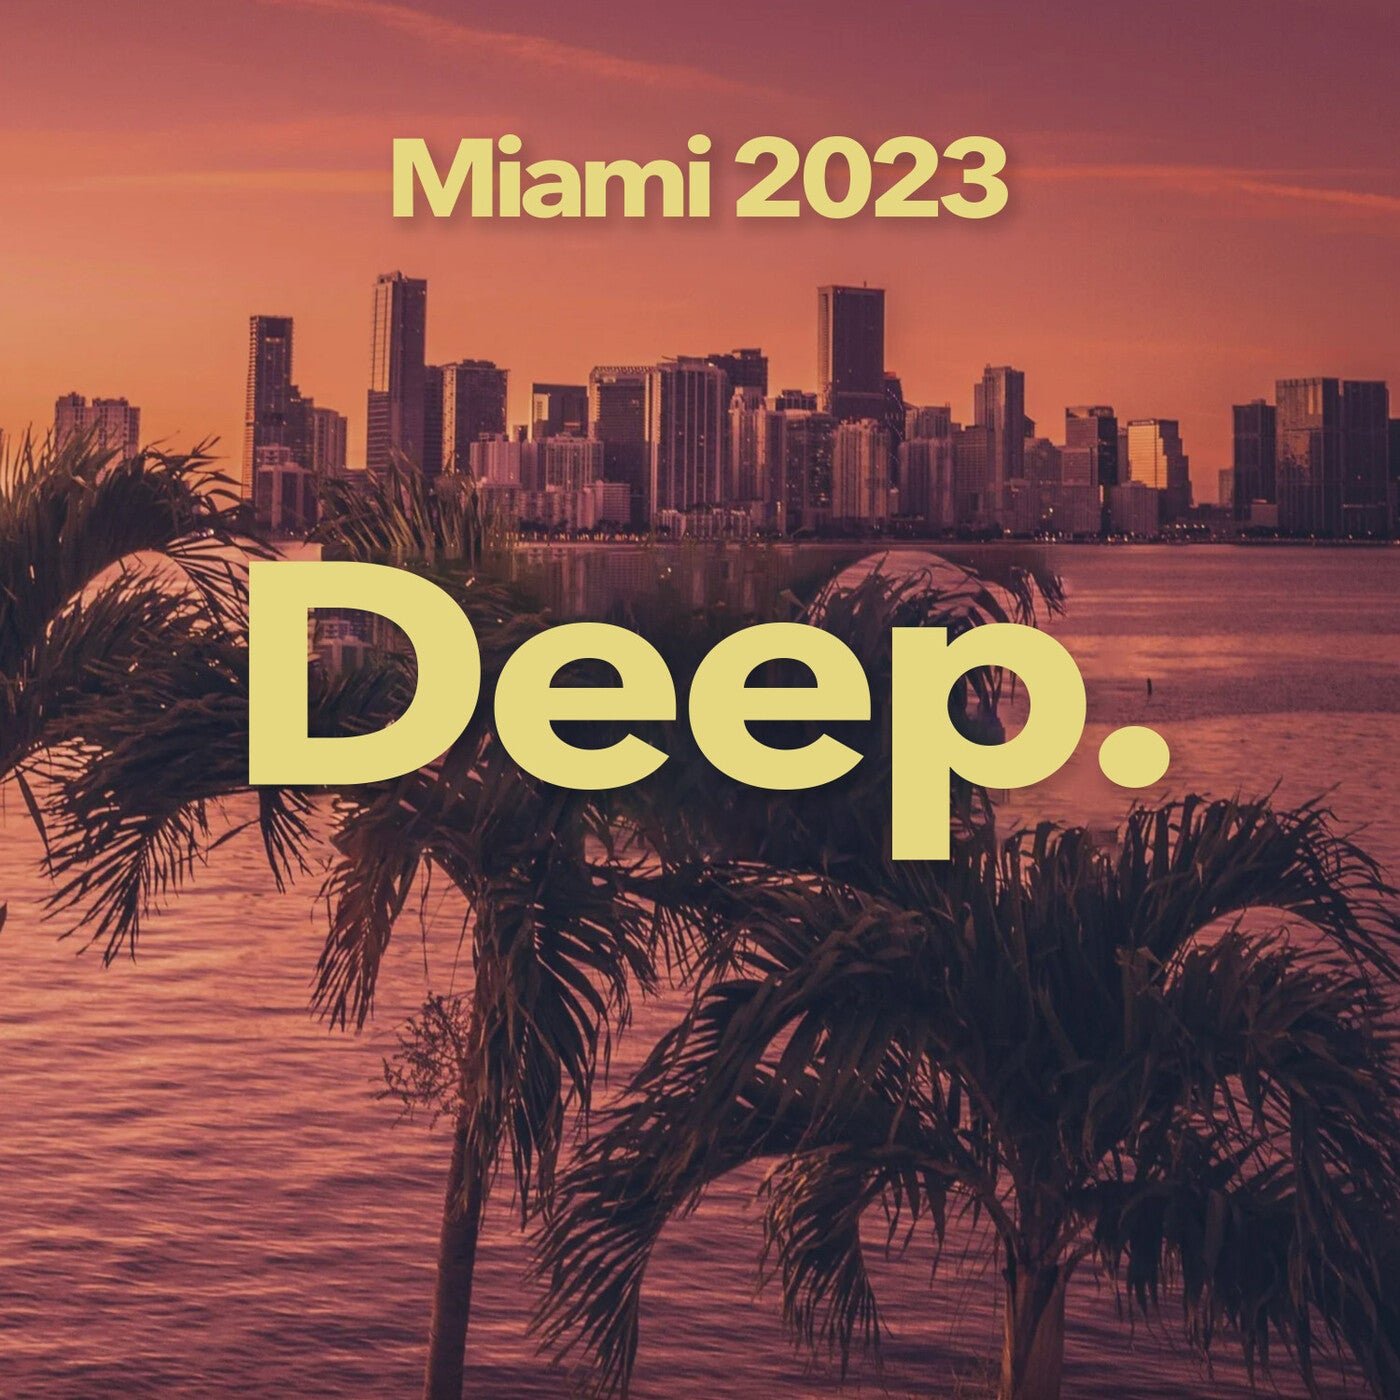 Miami 2023 Deep